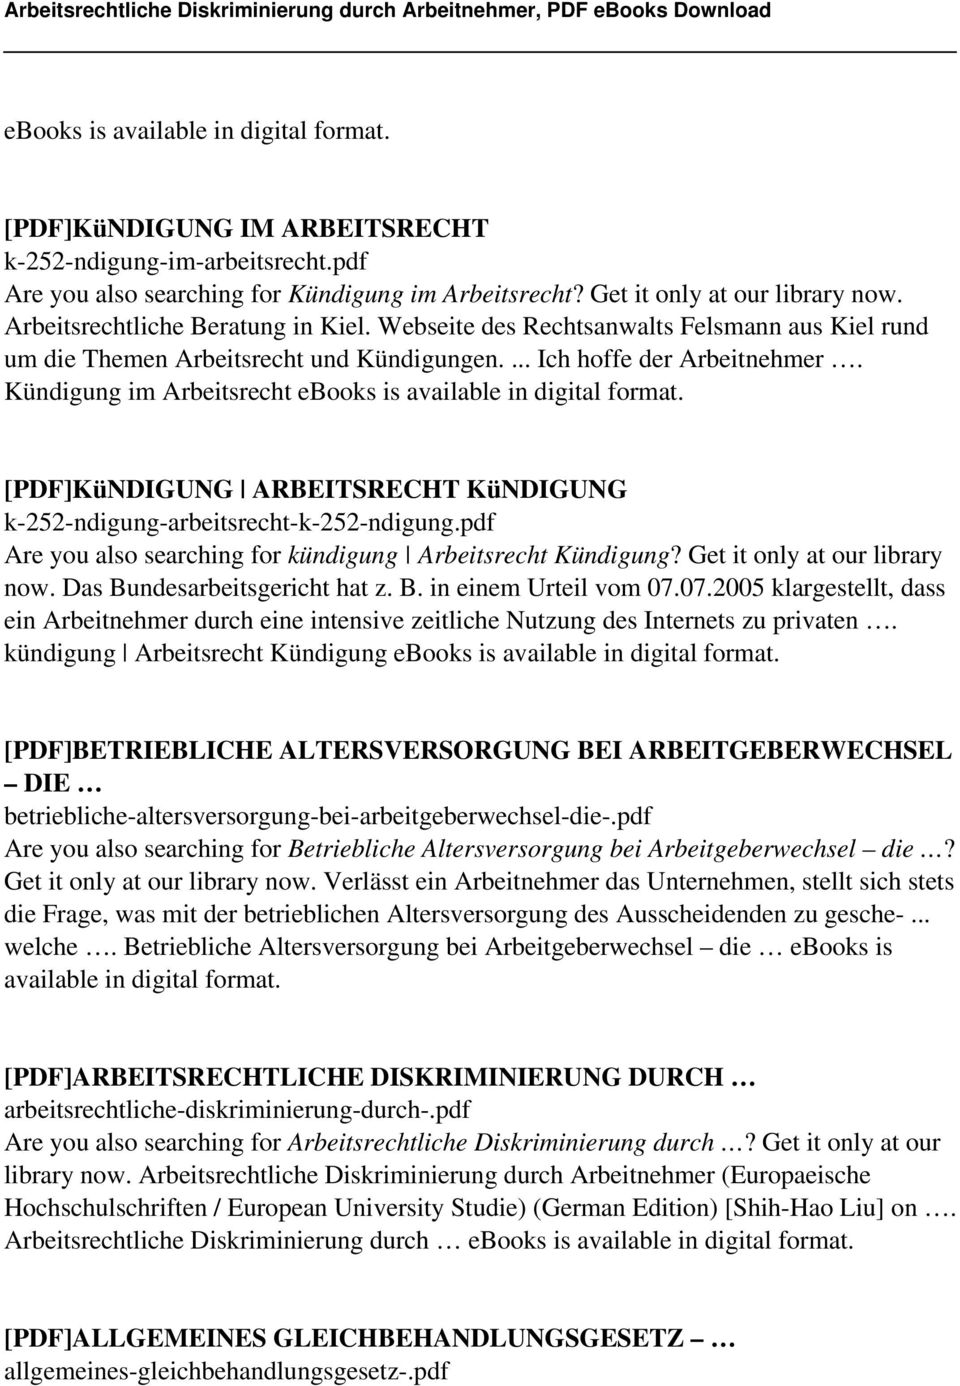 Kündigung im Arbeitsrecht ebooks is available in digital format. [PDF]KüNDIGUNG ARBEITSRECHT KüNDIGUNG k-252-ndigung-arbeitsrecht-k-252-ndigung.